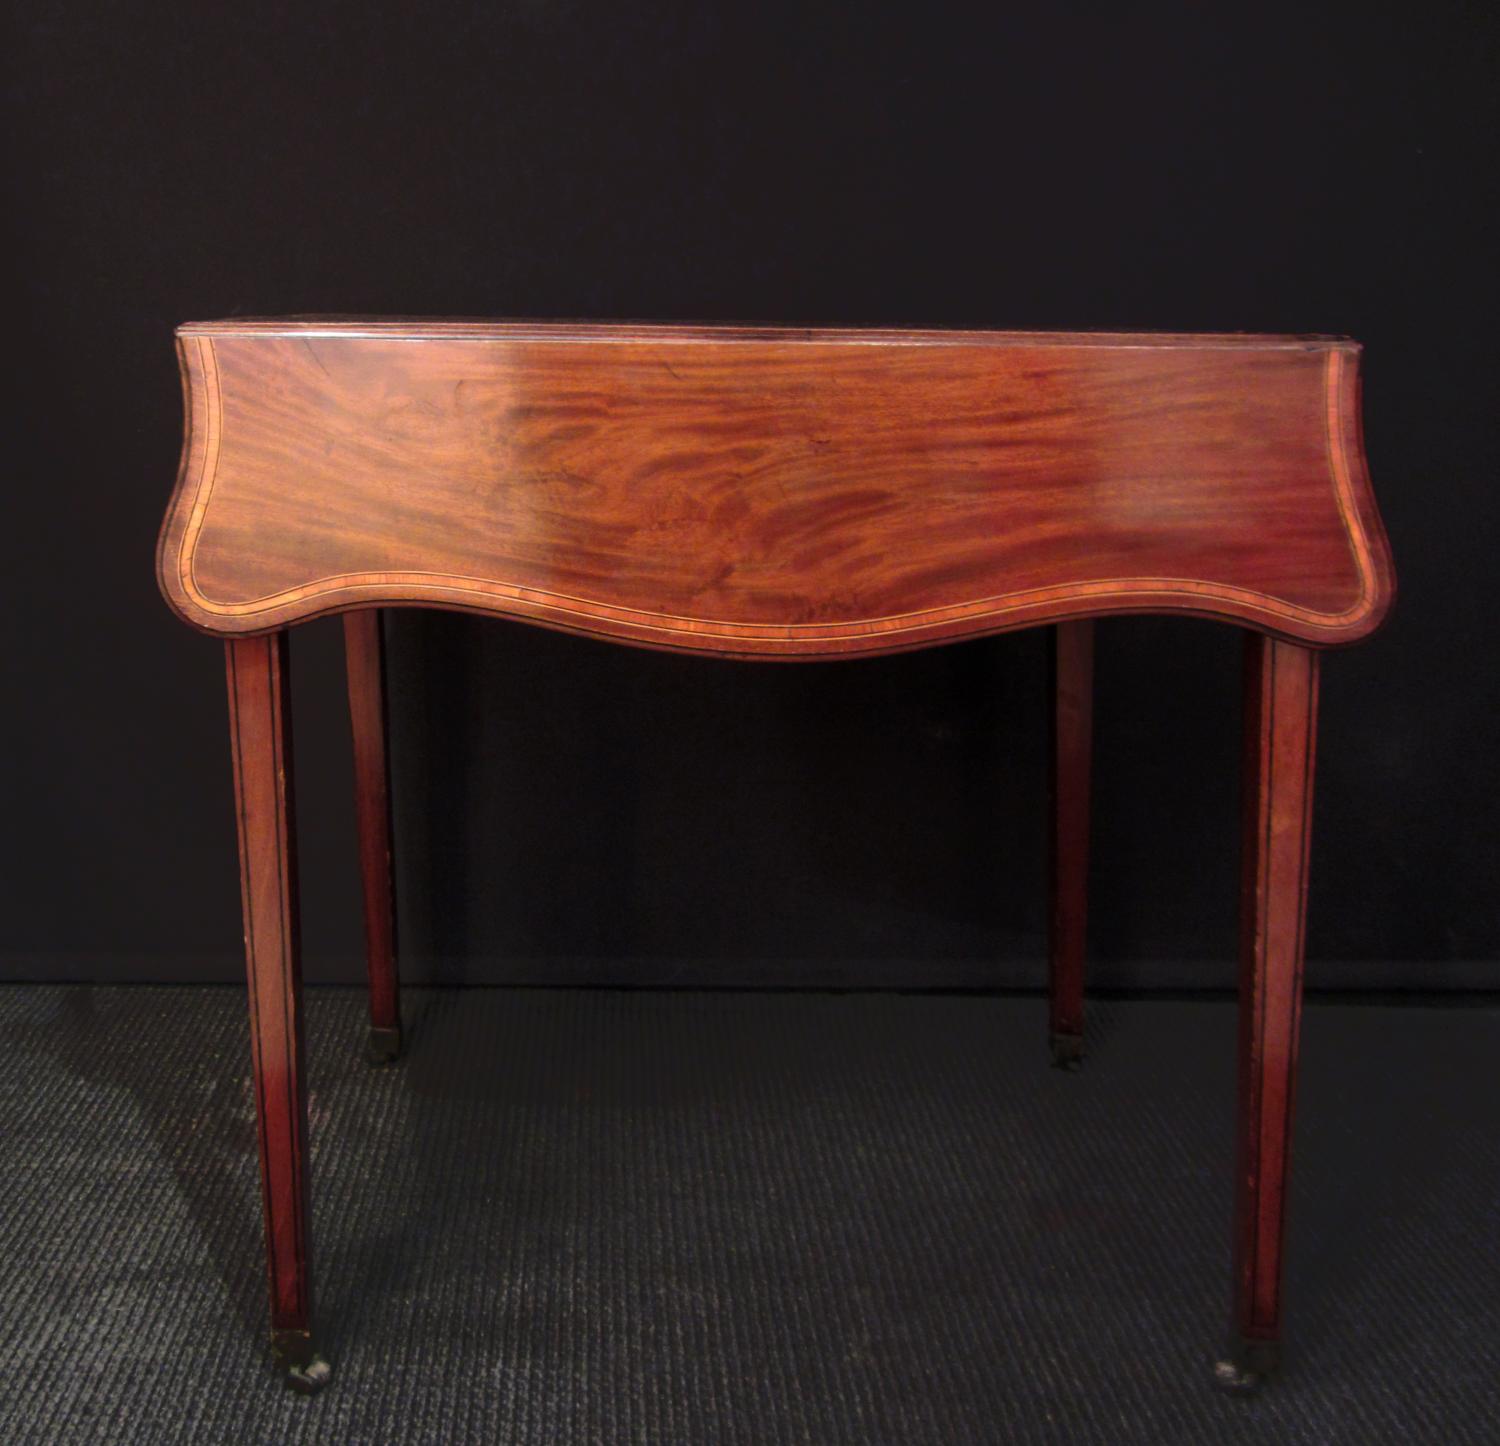 A mahogany pembroke table